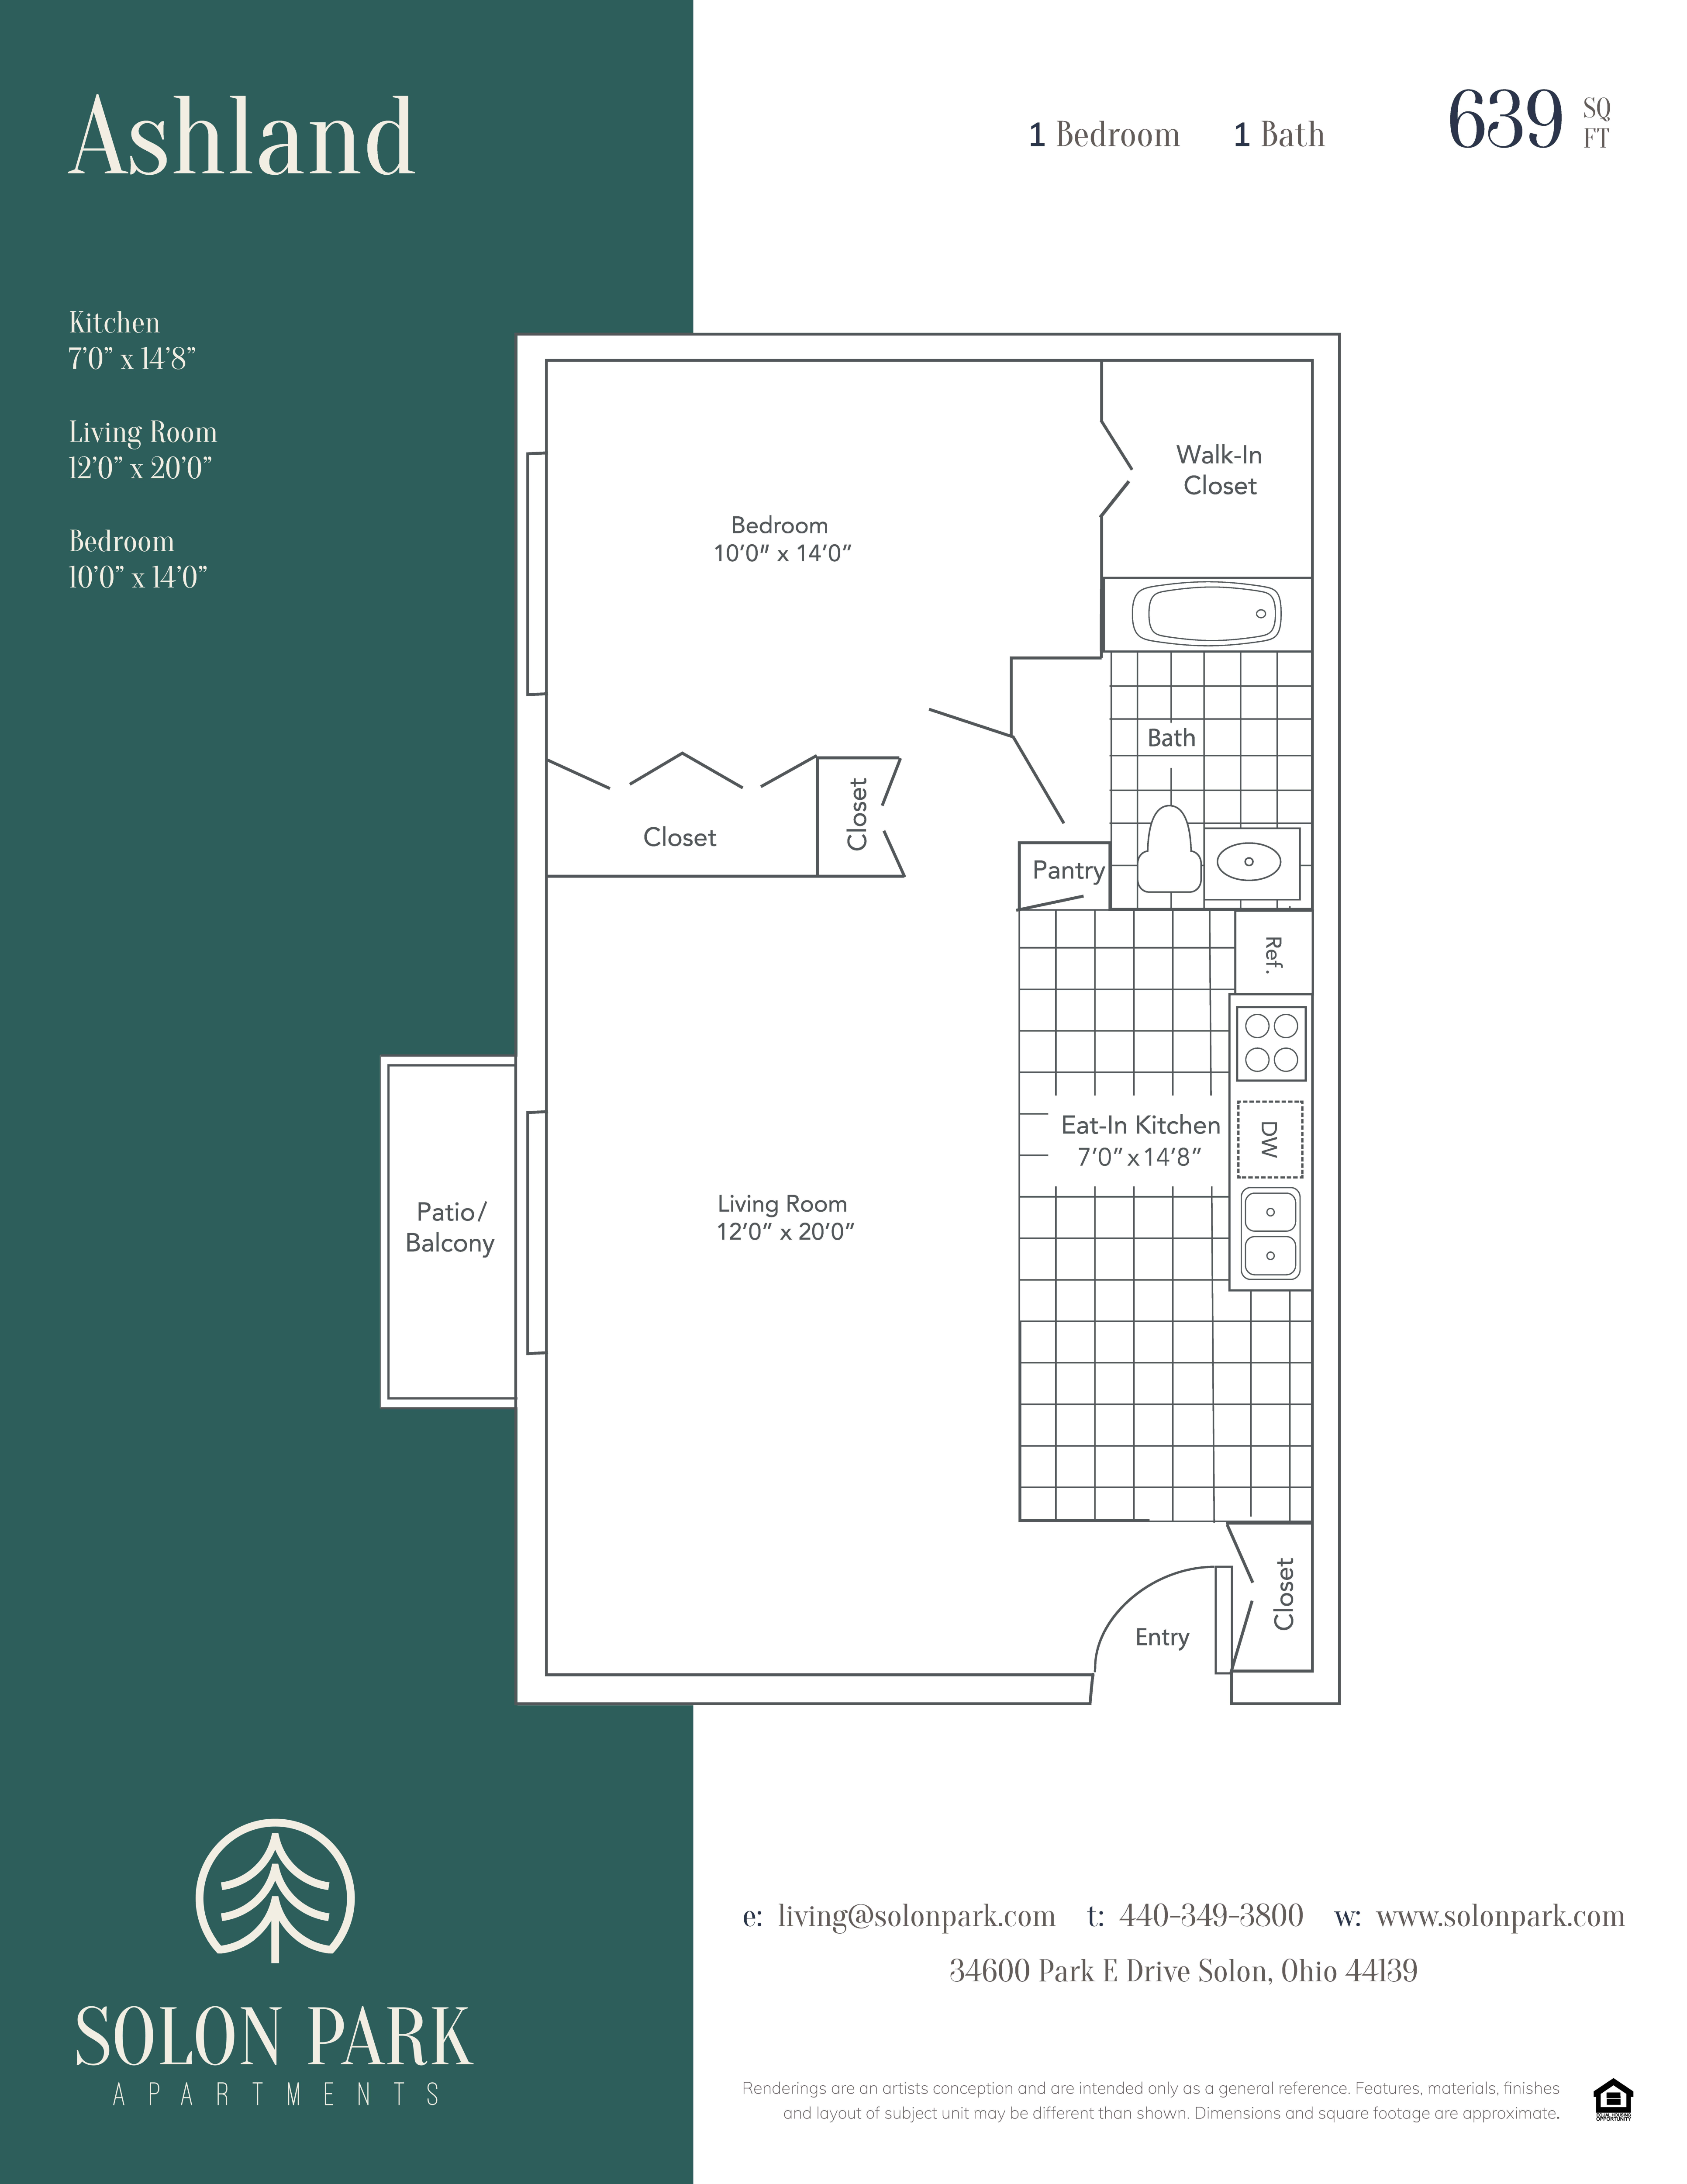 Solon Park Floorplan Sheet Ashland.jpg